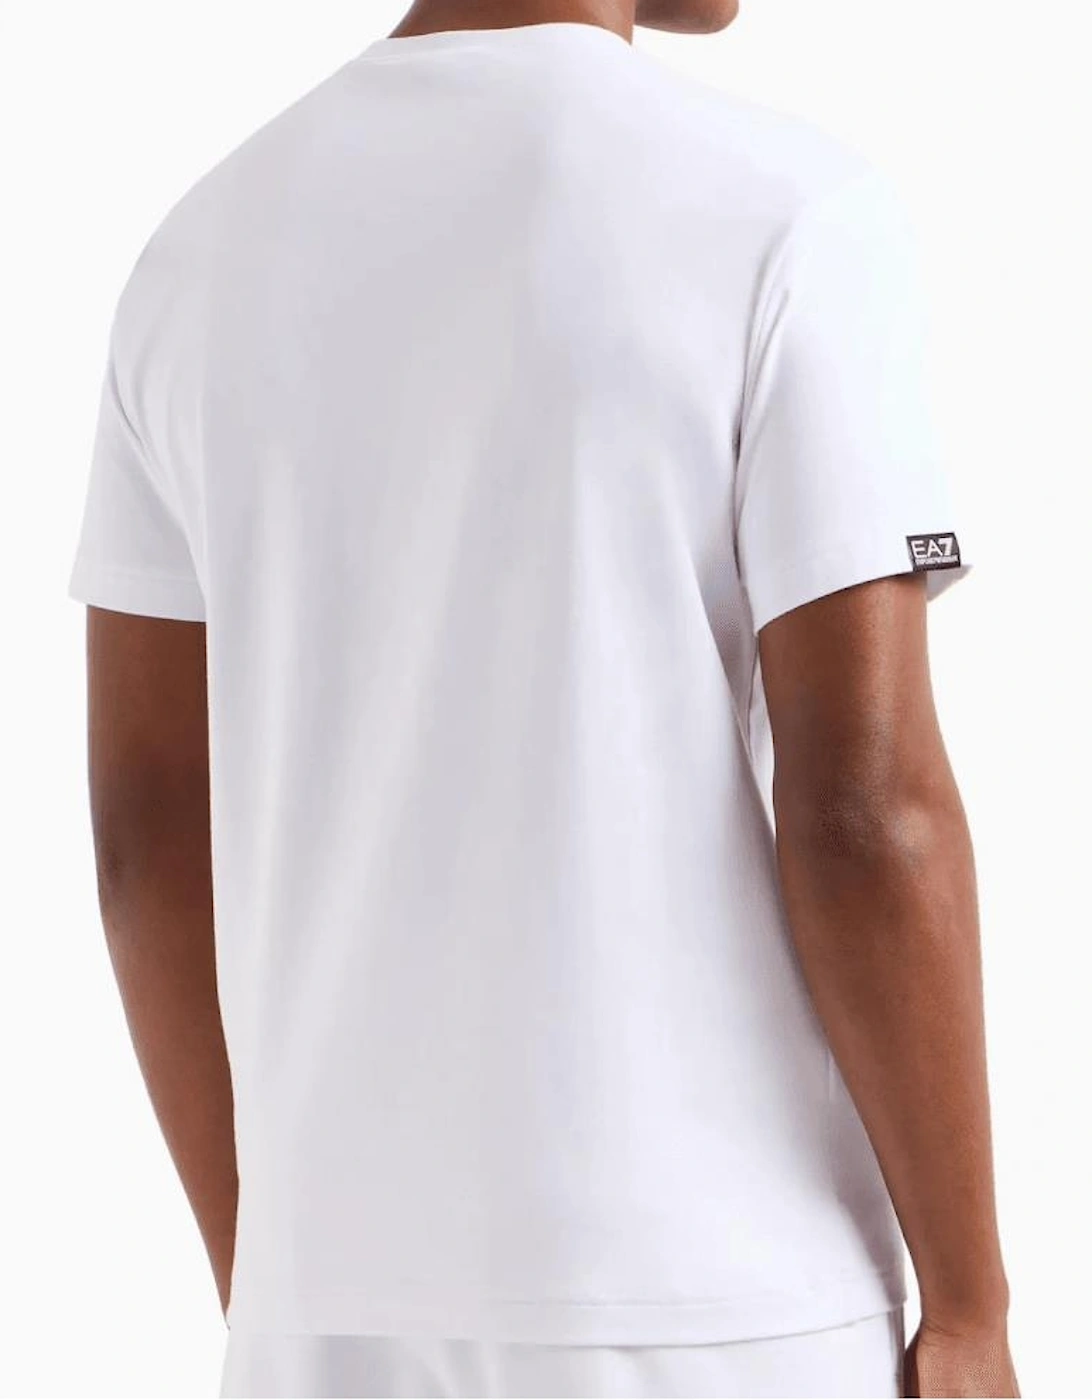 Cotton Printed Logo White/Silver T-Shirt